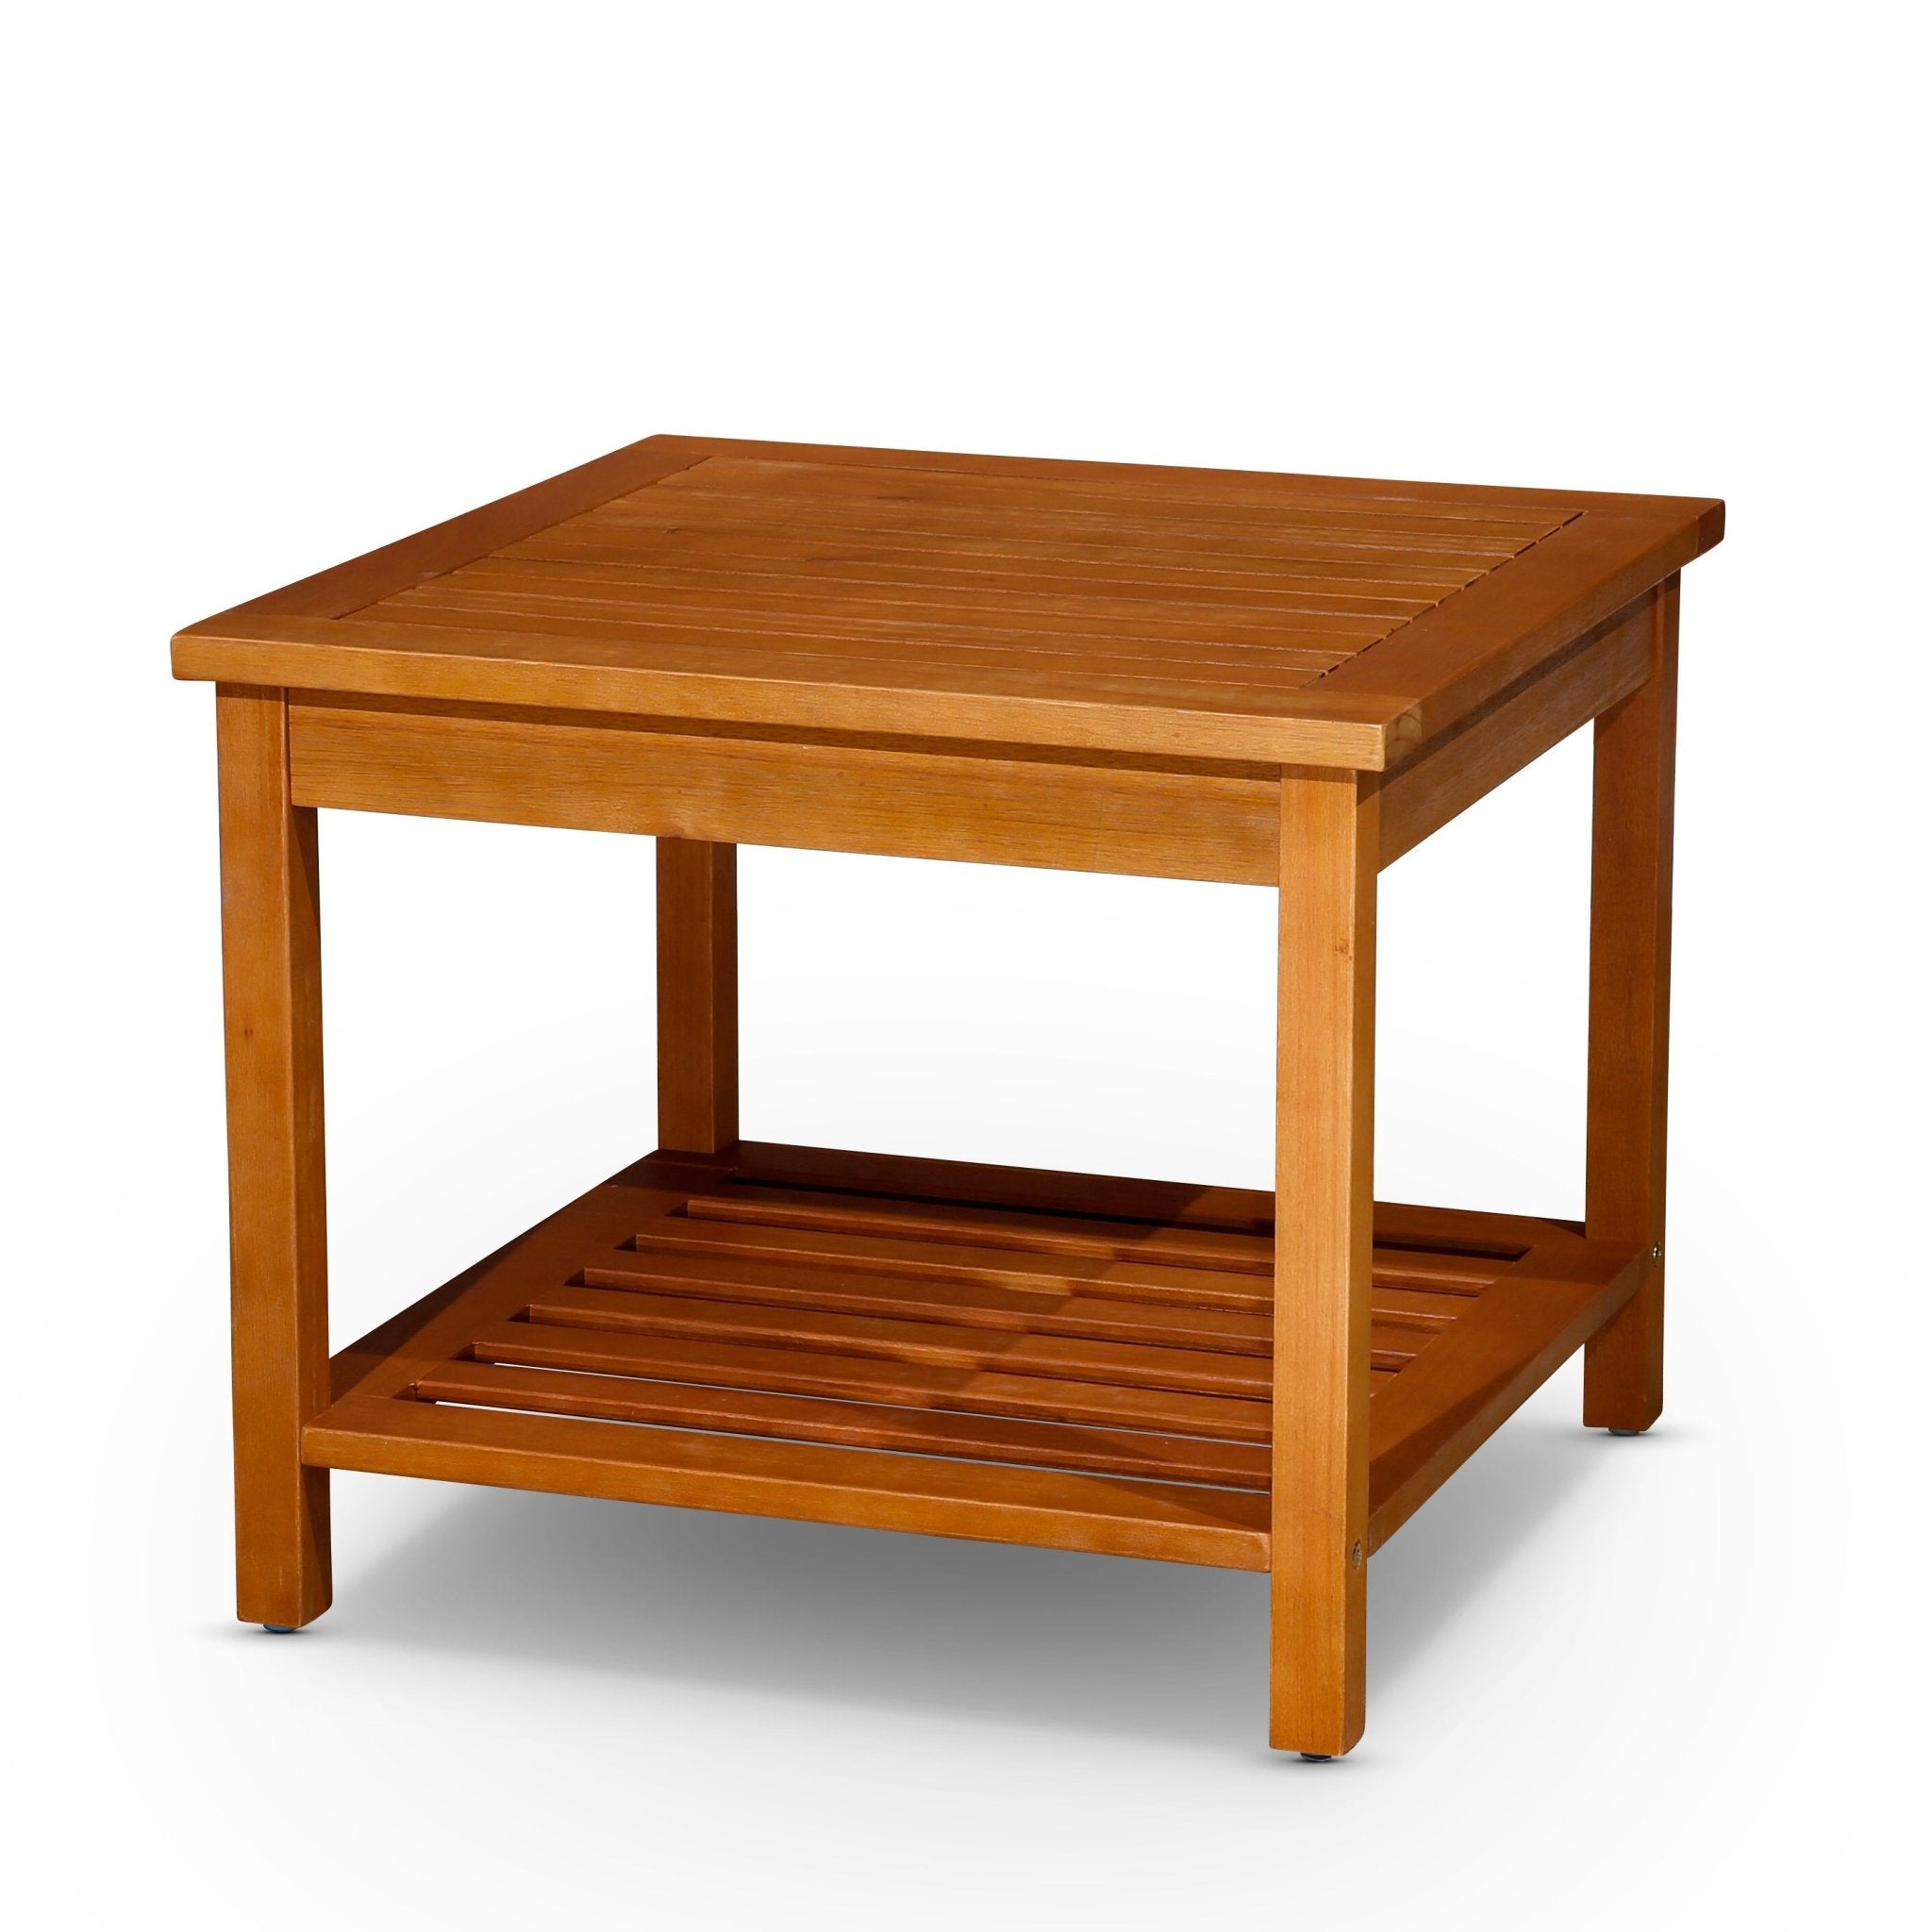 Eucalyptus Outdoor 2-shelf Side Table, Espresso - Tuesday Morning-Tables